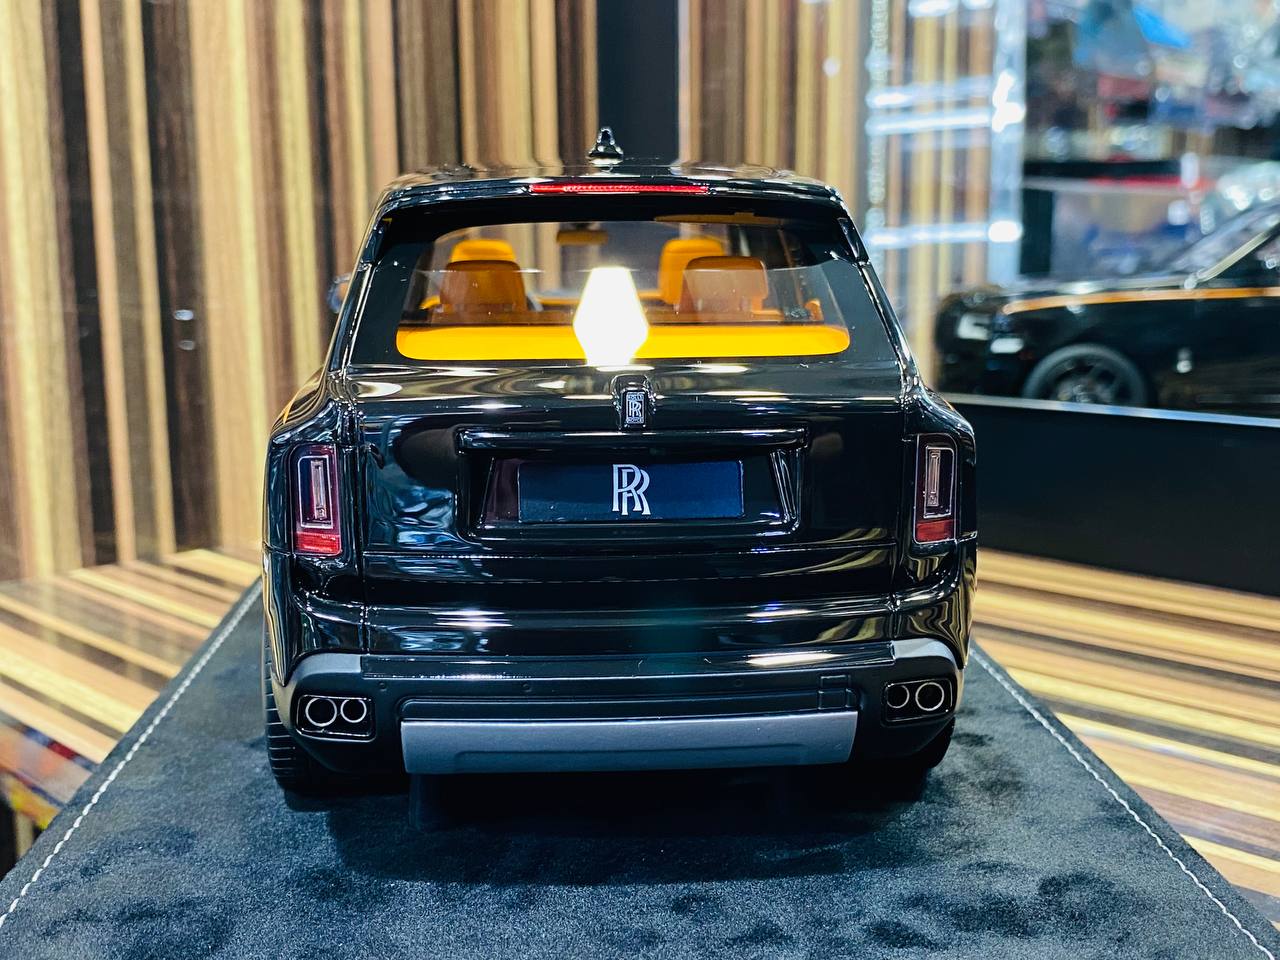 1/18 Resin Model HH Rolls Royce Cullinan - Diamond Black Badge (Limited Edition)